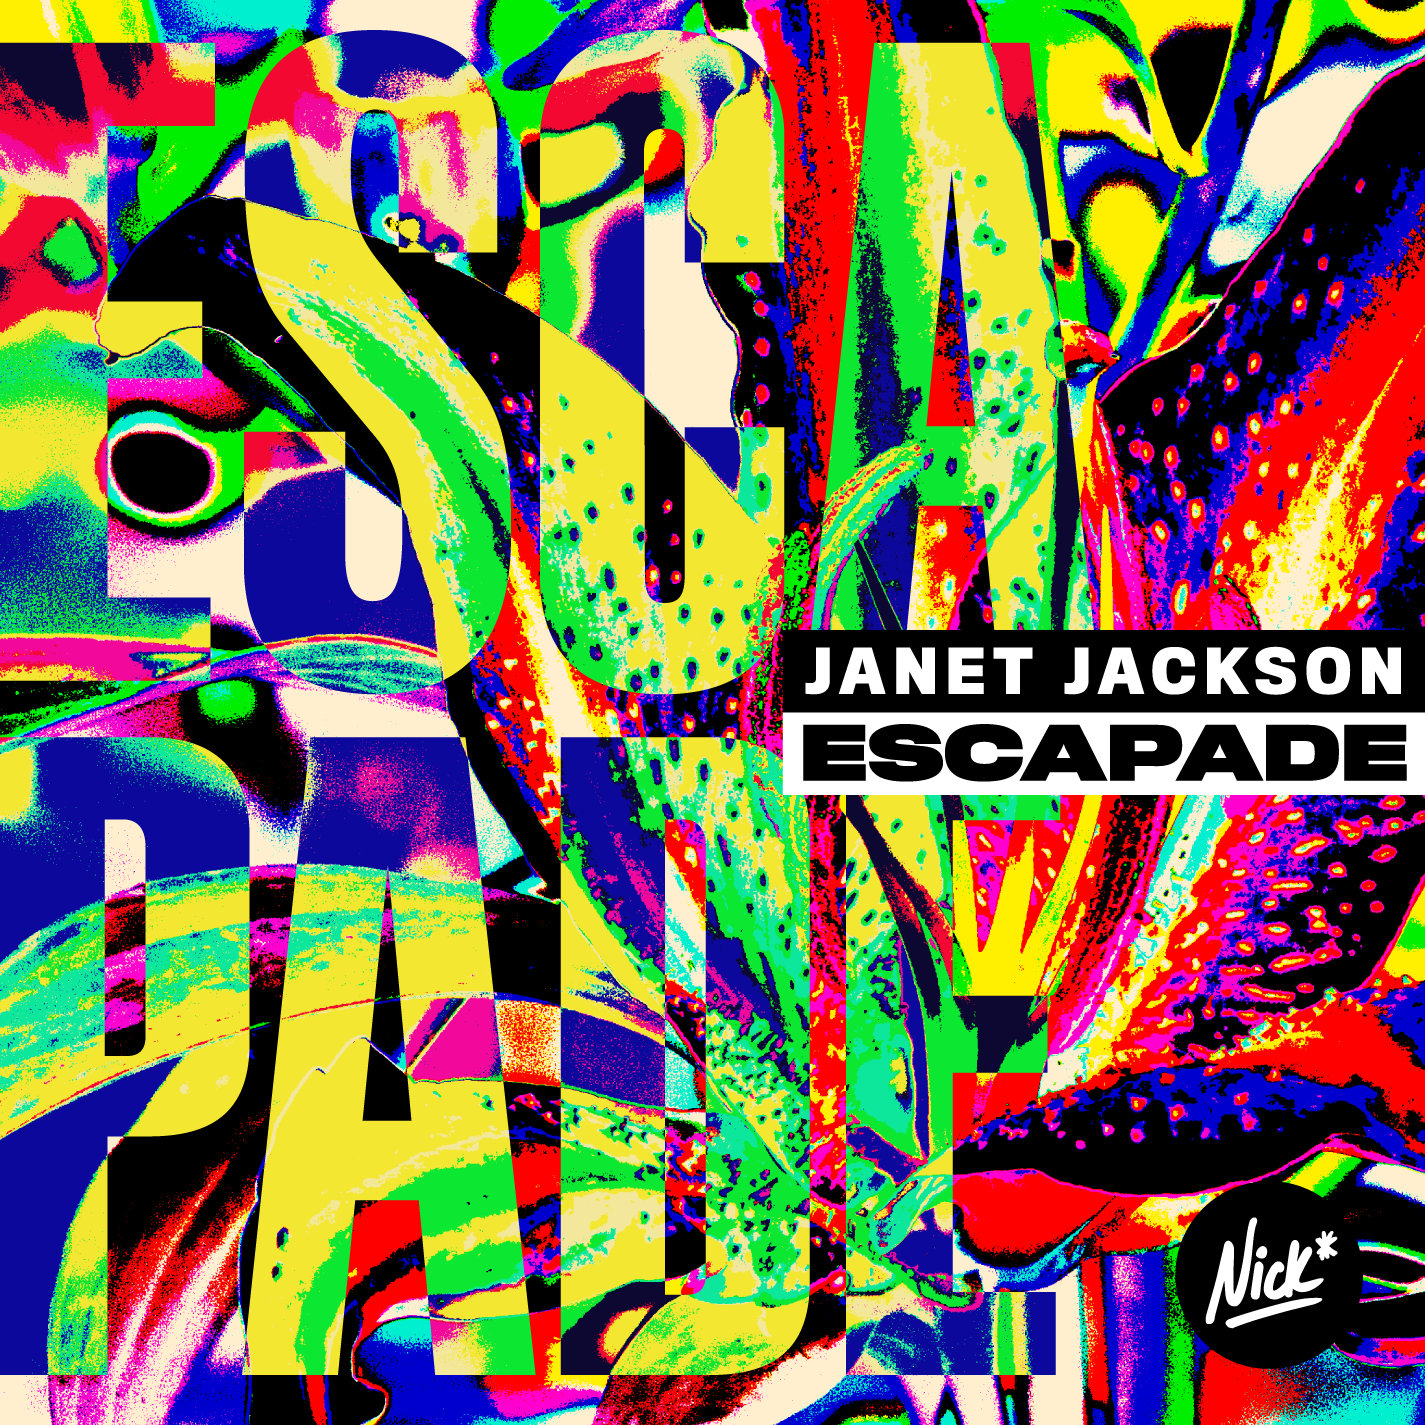 Janet Jackson - Escapade Nick* Maui Sunset Mix